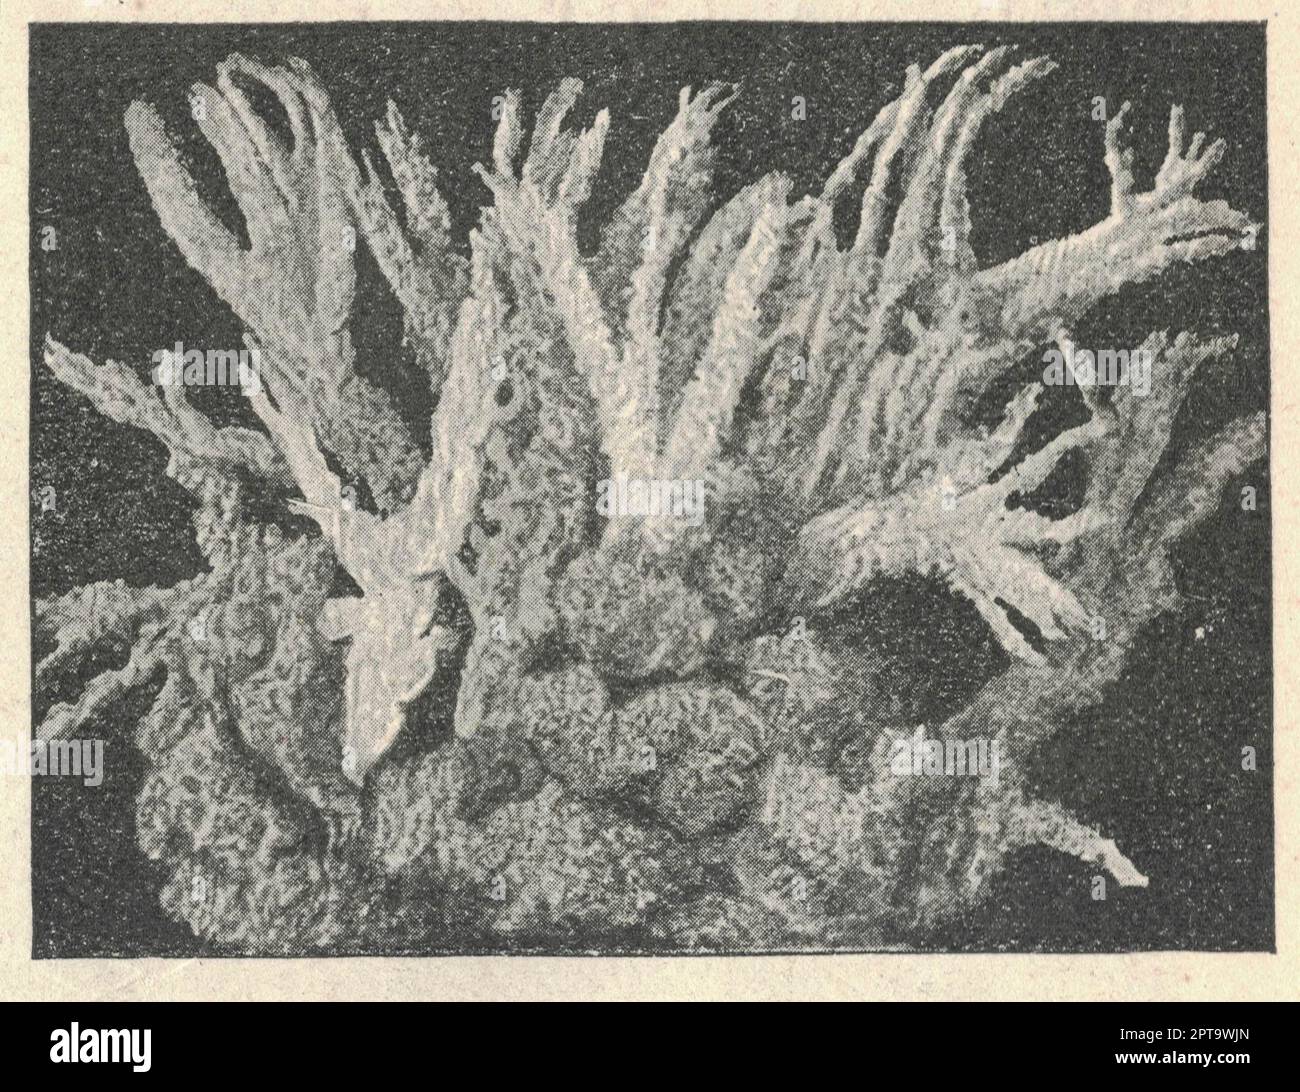 Symbiosis of Spongilla lacustris on top with Plumatella fungosa (underneath). Book illustration published 1907. Spongilla lacustris is a species of fr Stock Photo